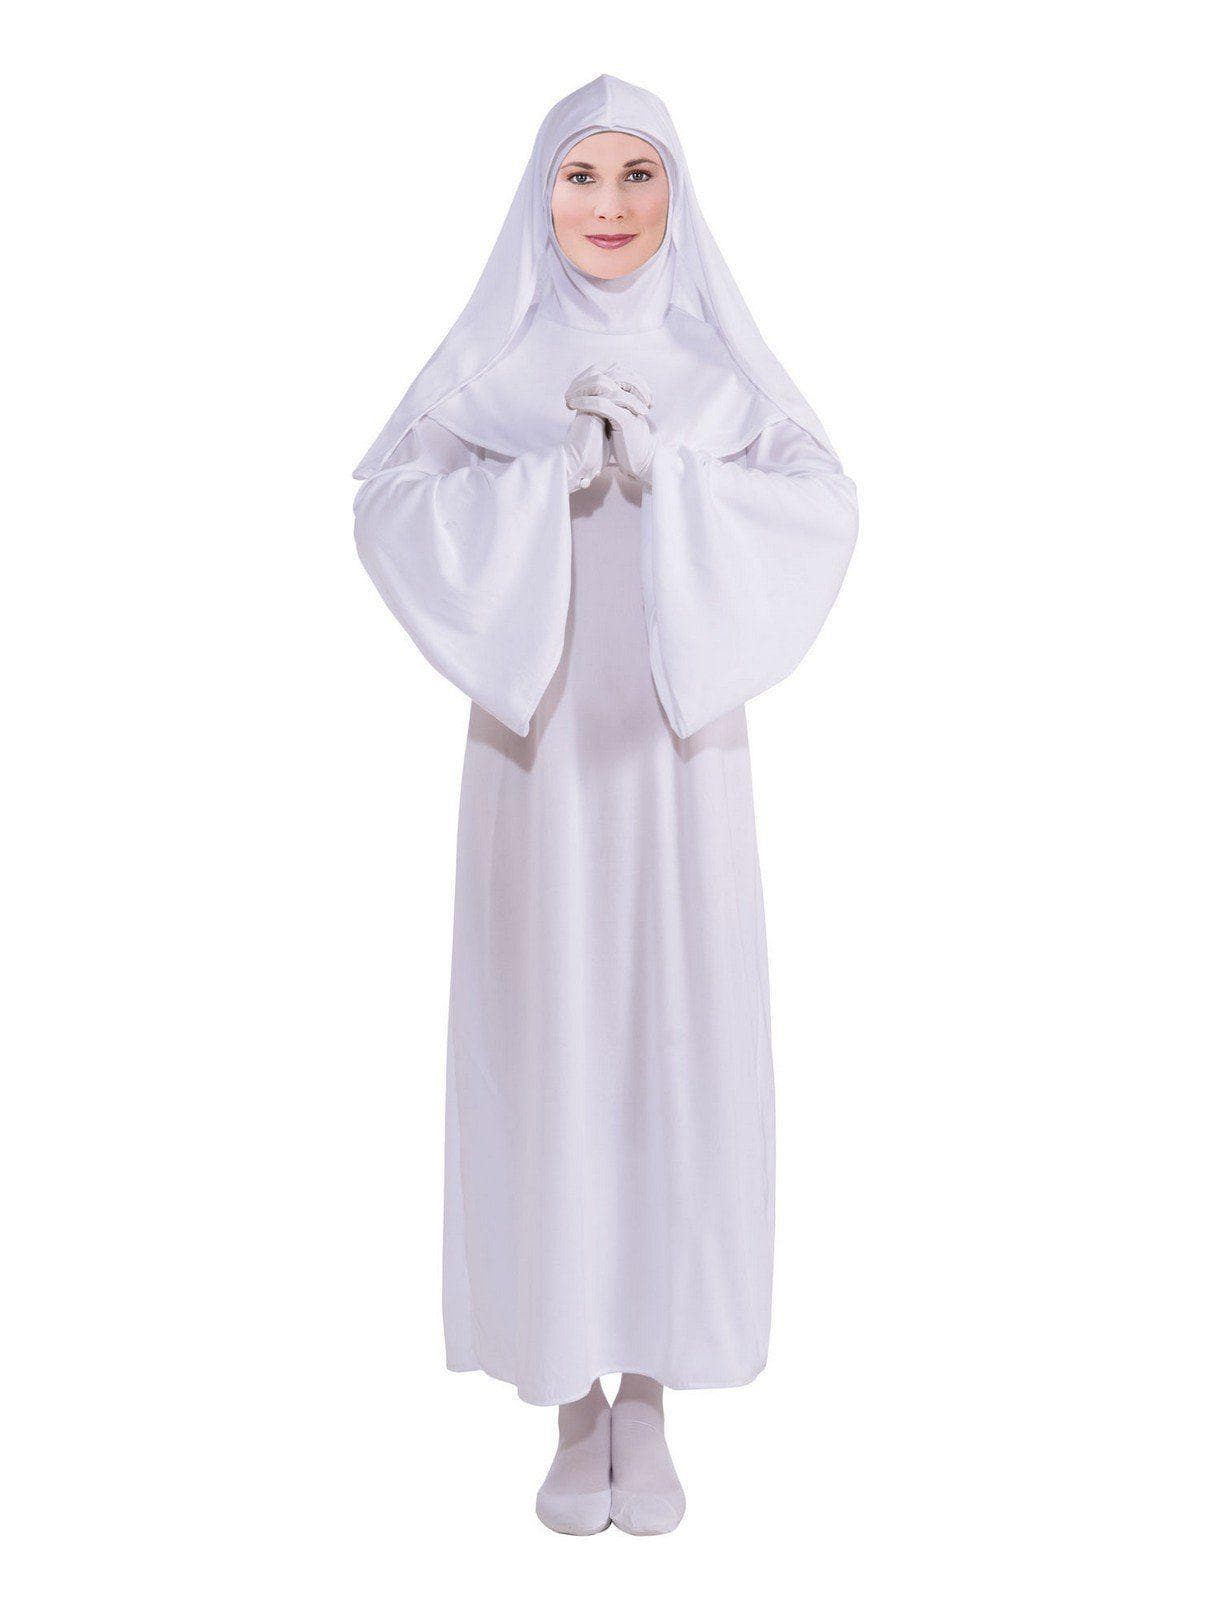 Women's White Nun Costume - costumes.com